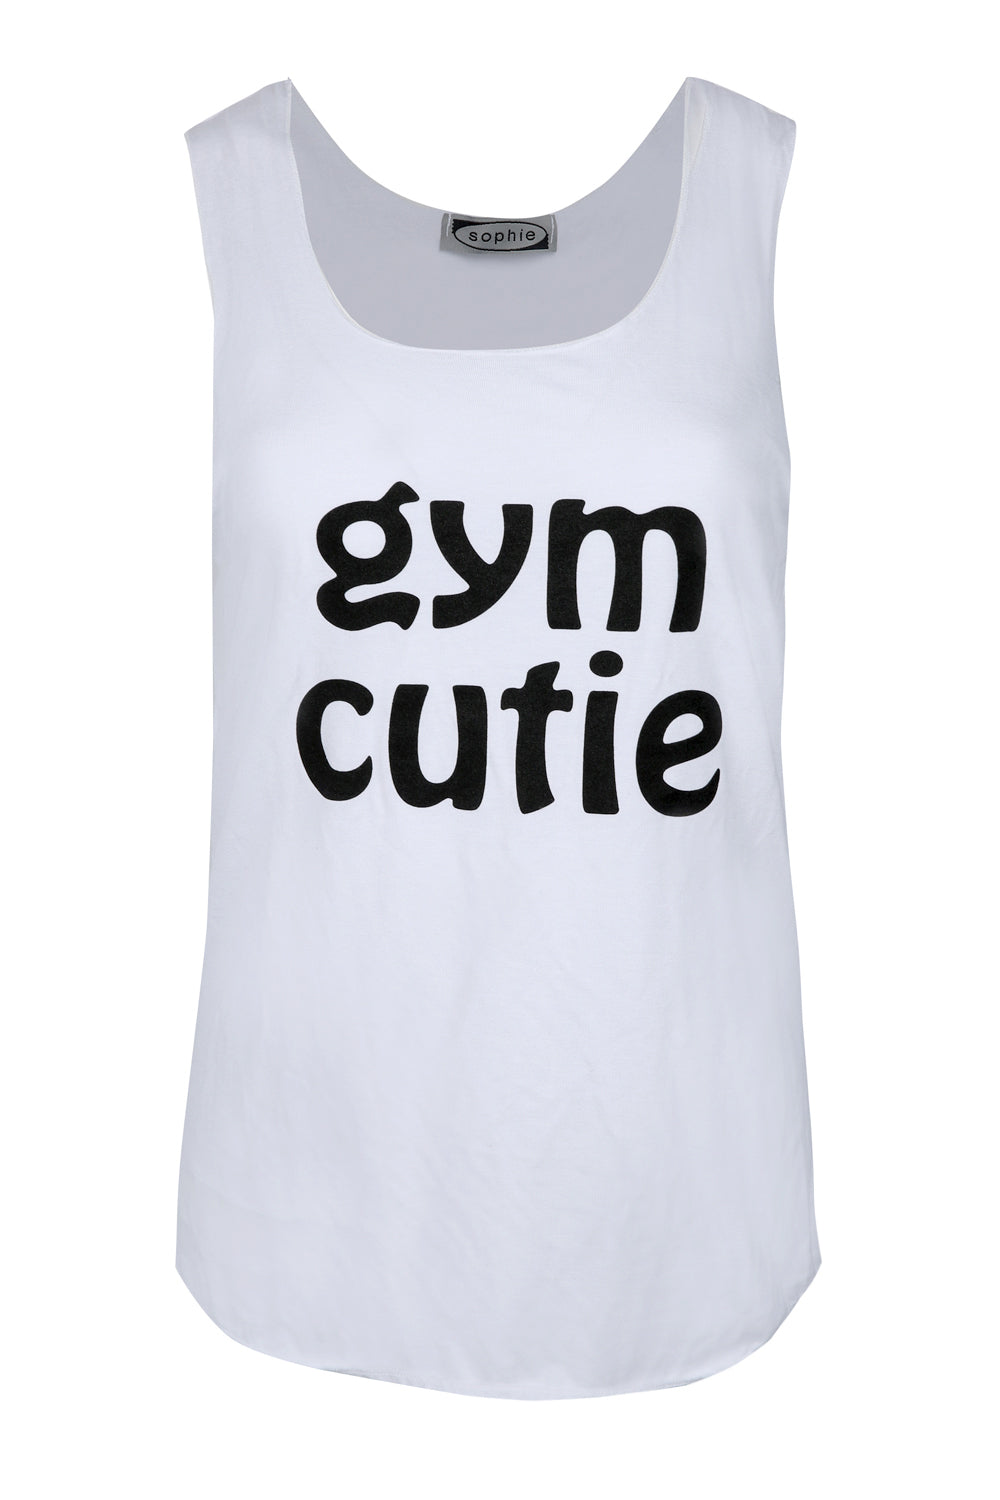 Amelia Sleeveless Slogan Gym Vest